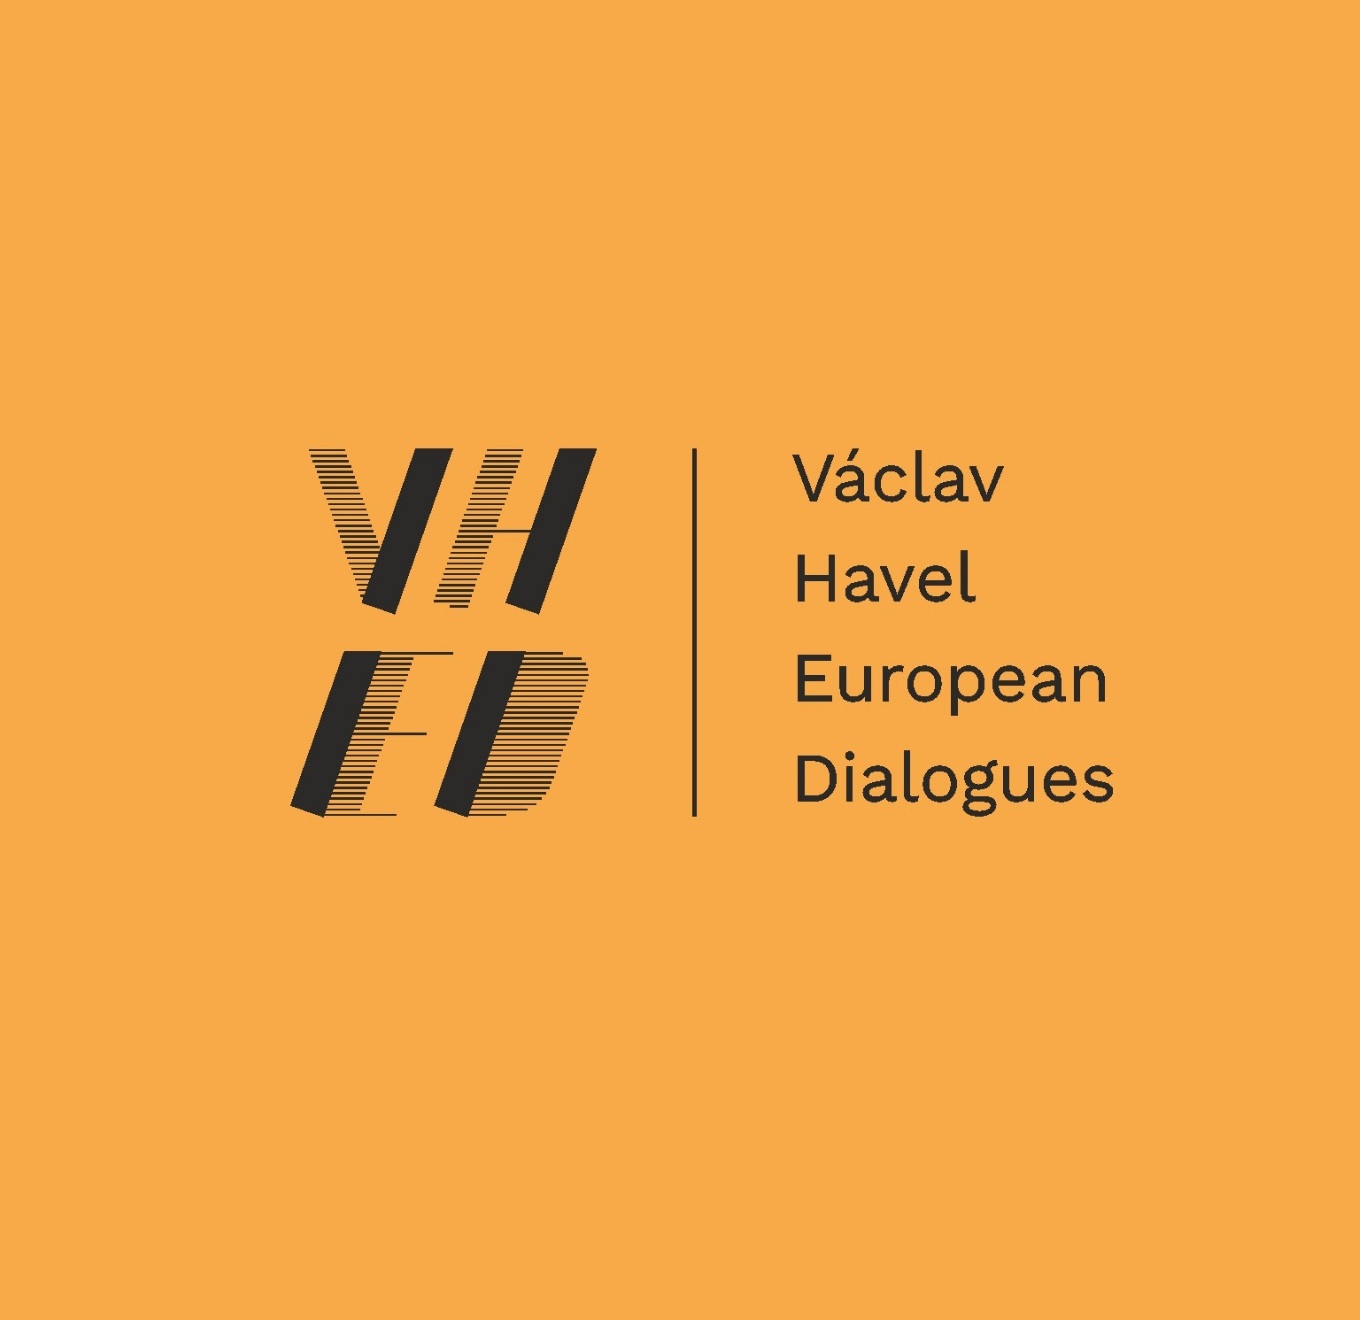 Evropské dialogy Václava Havla: Informace a demokracie, Praha